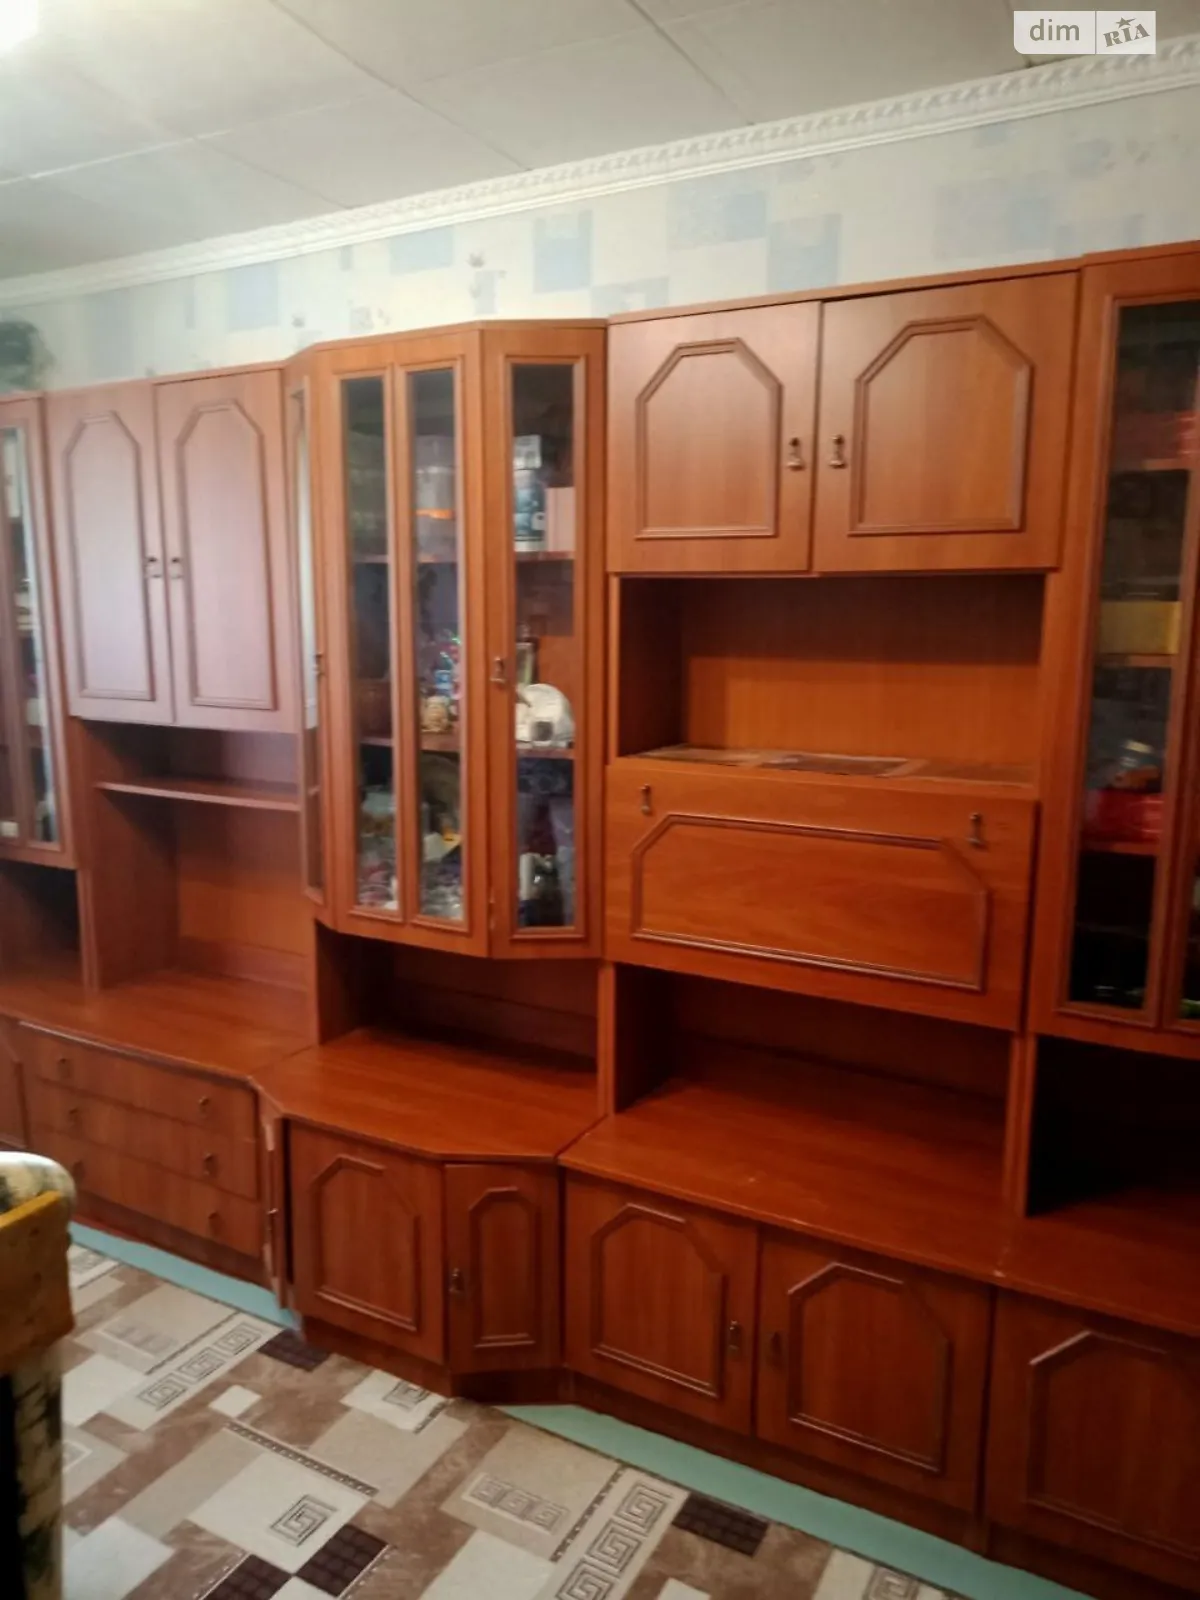 Продается комната 18 кв. м в Одессе, цена: 8200 $ - фото 1